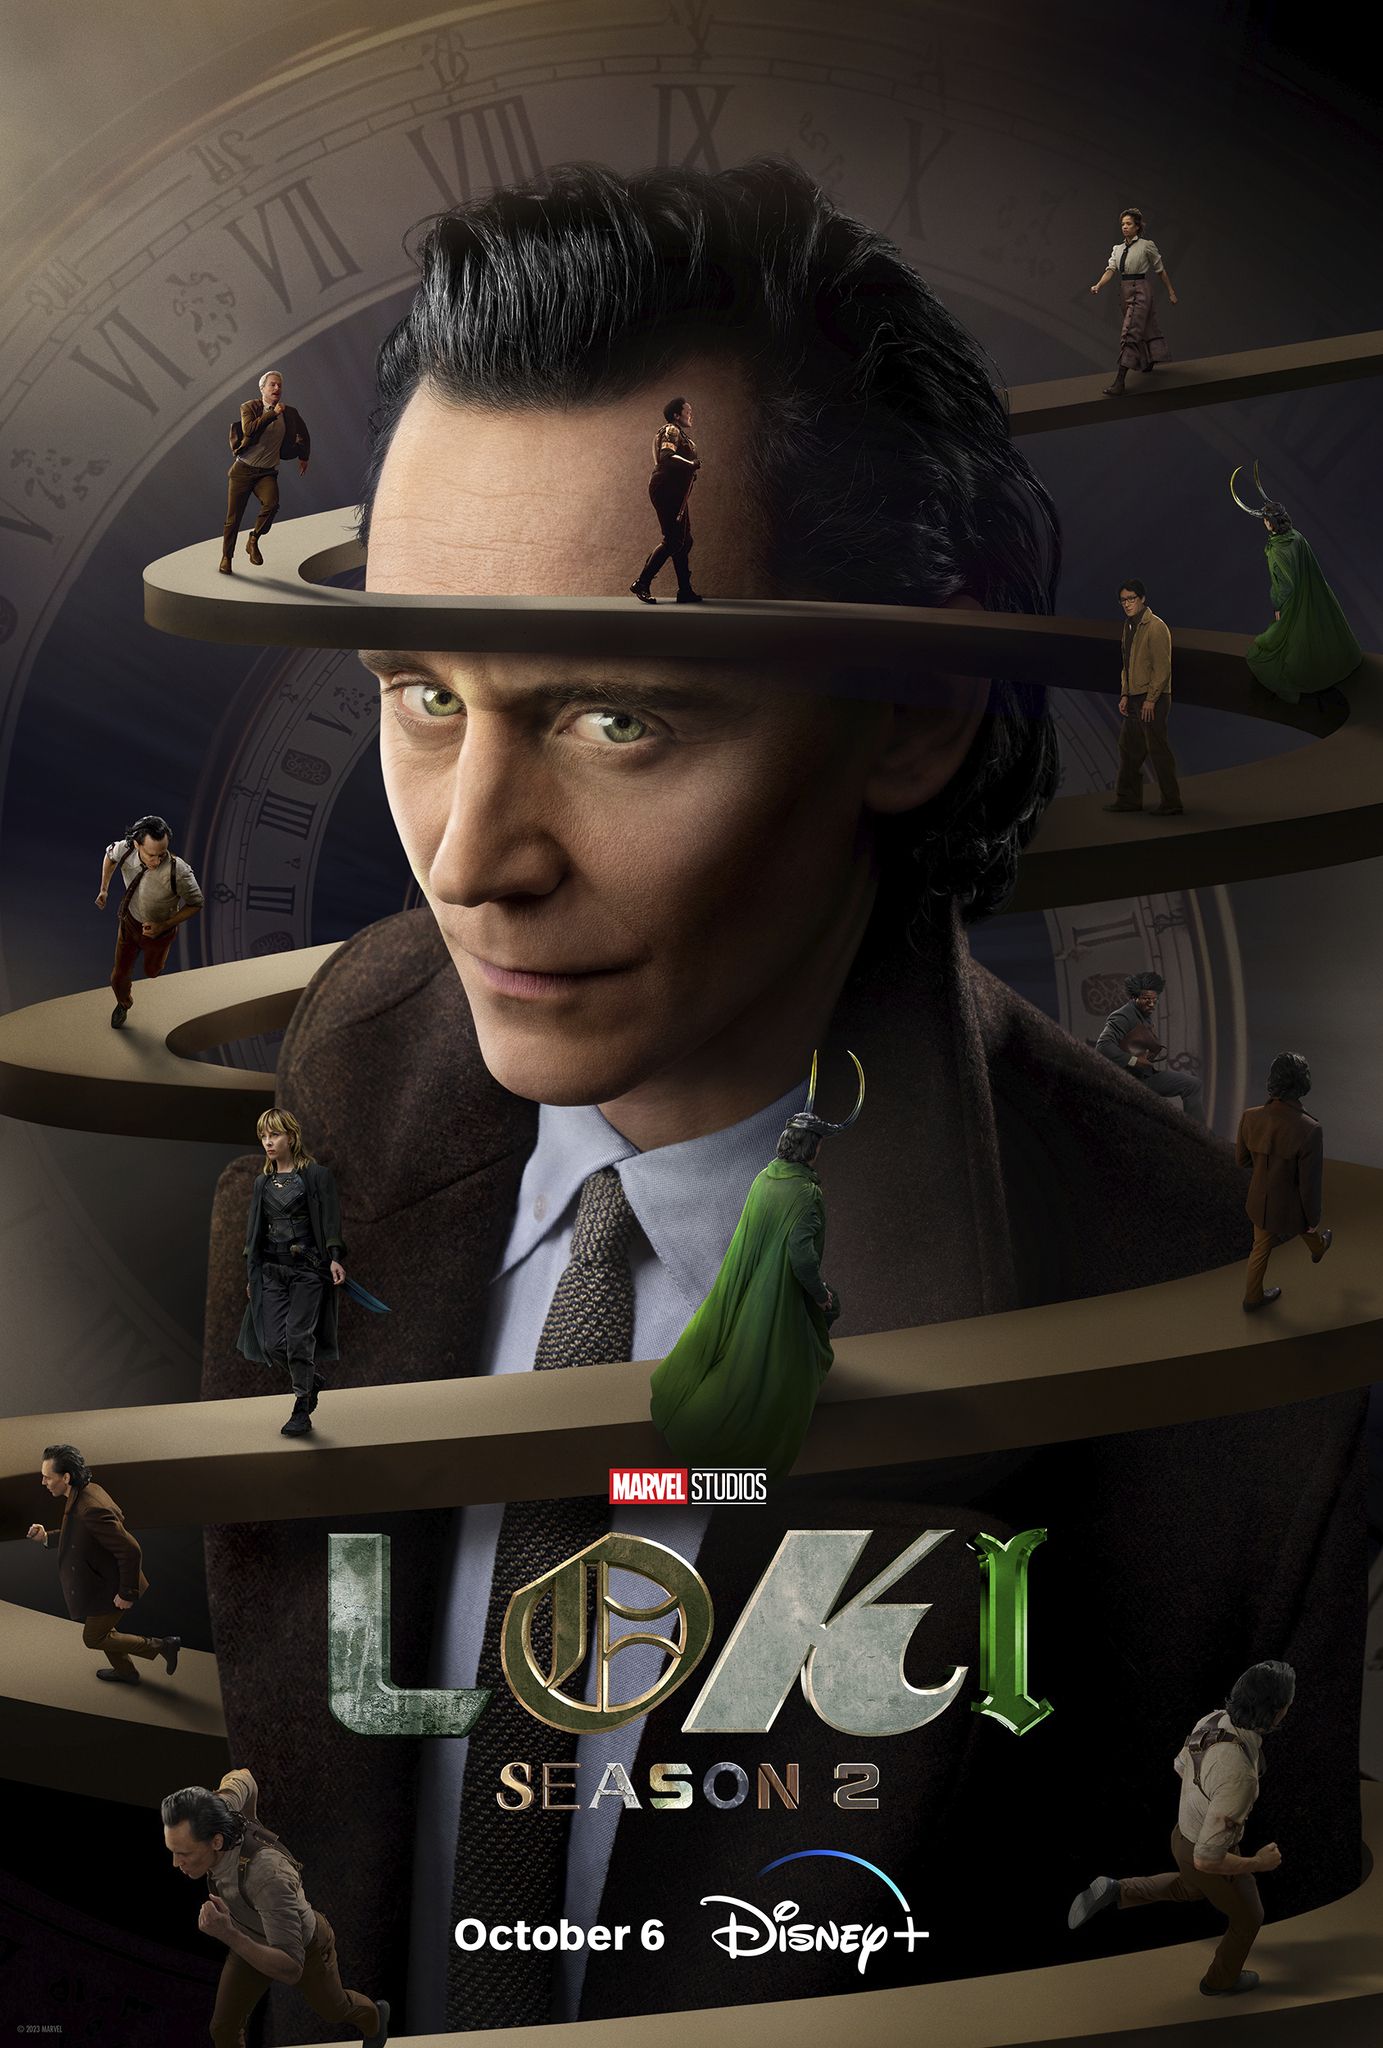 Funko Pop confirms the New Title of Tom Hiddleston's Loki